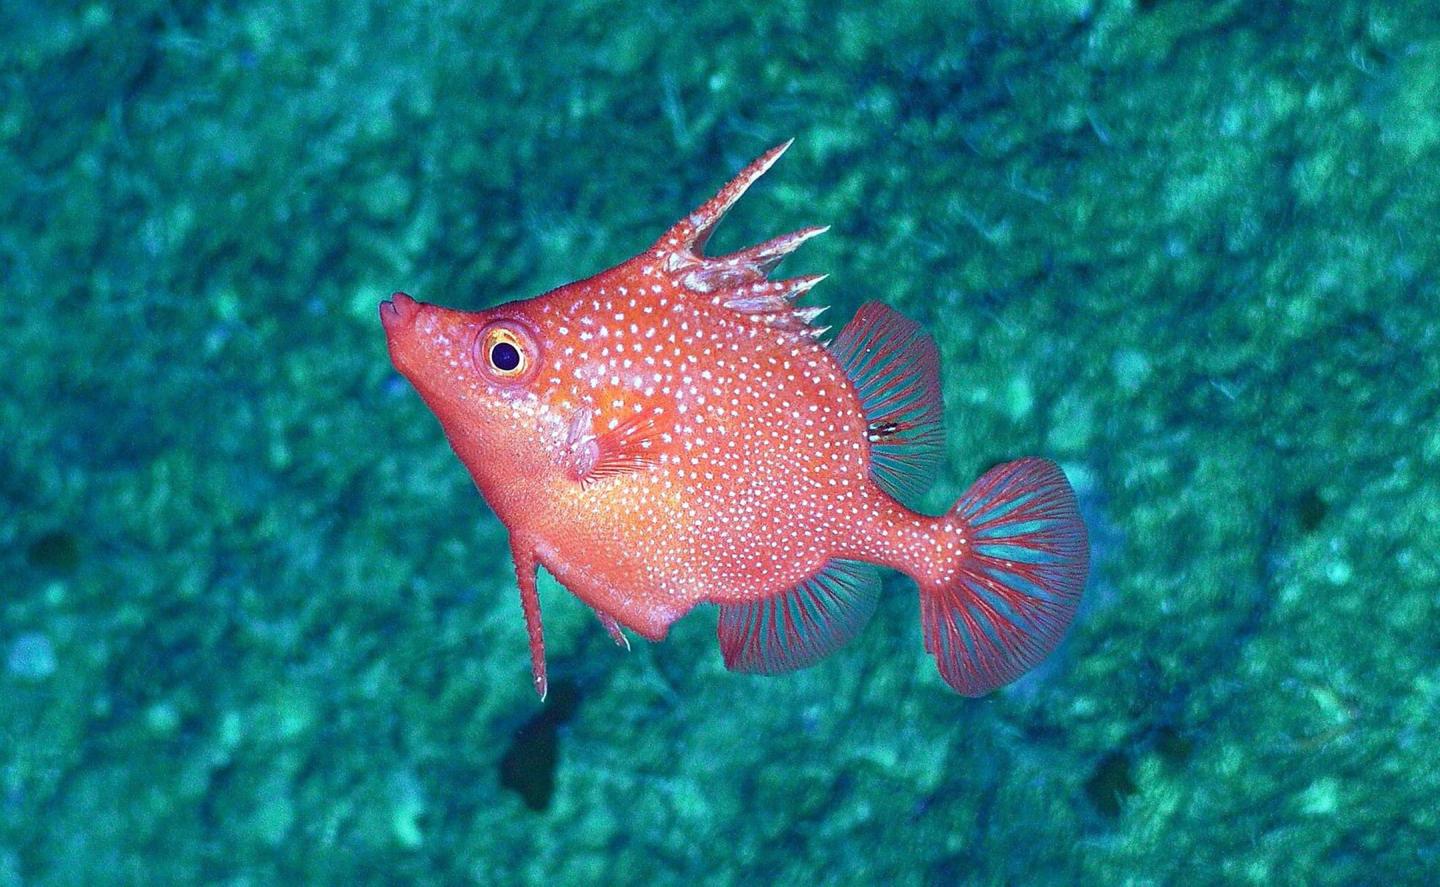 deepwater spike fish [IMAGE]  EurekAlert! Science News Releases